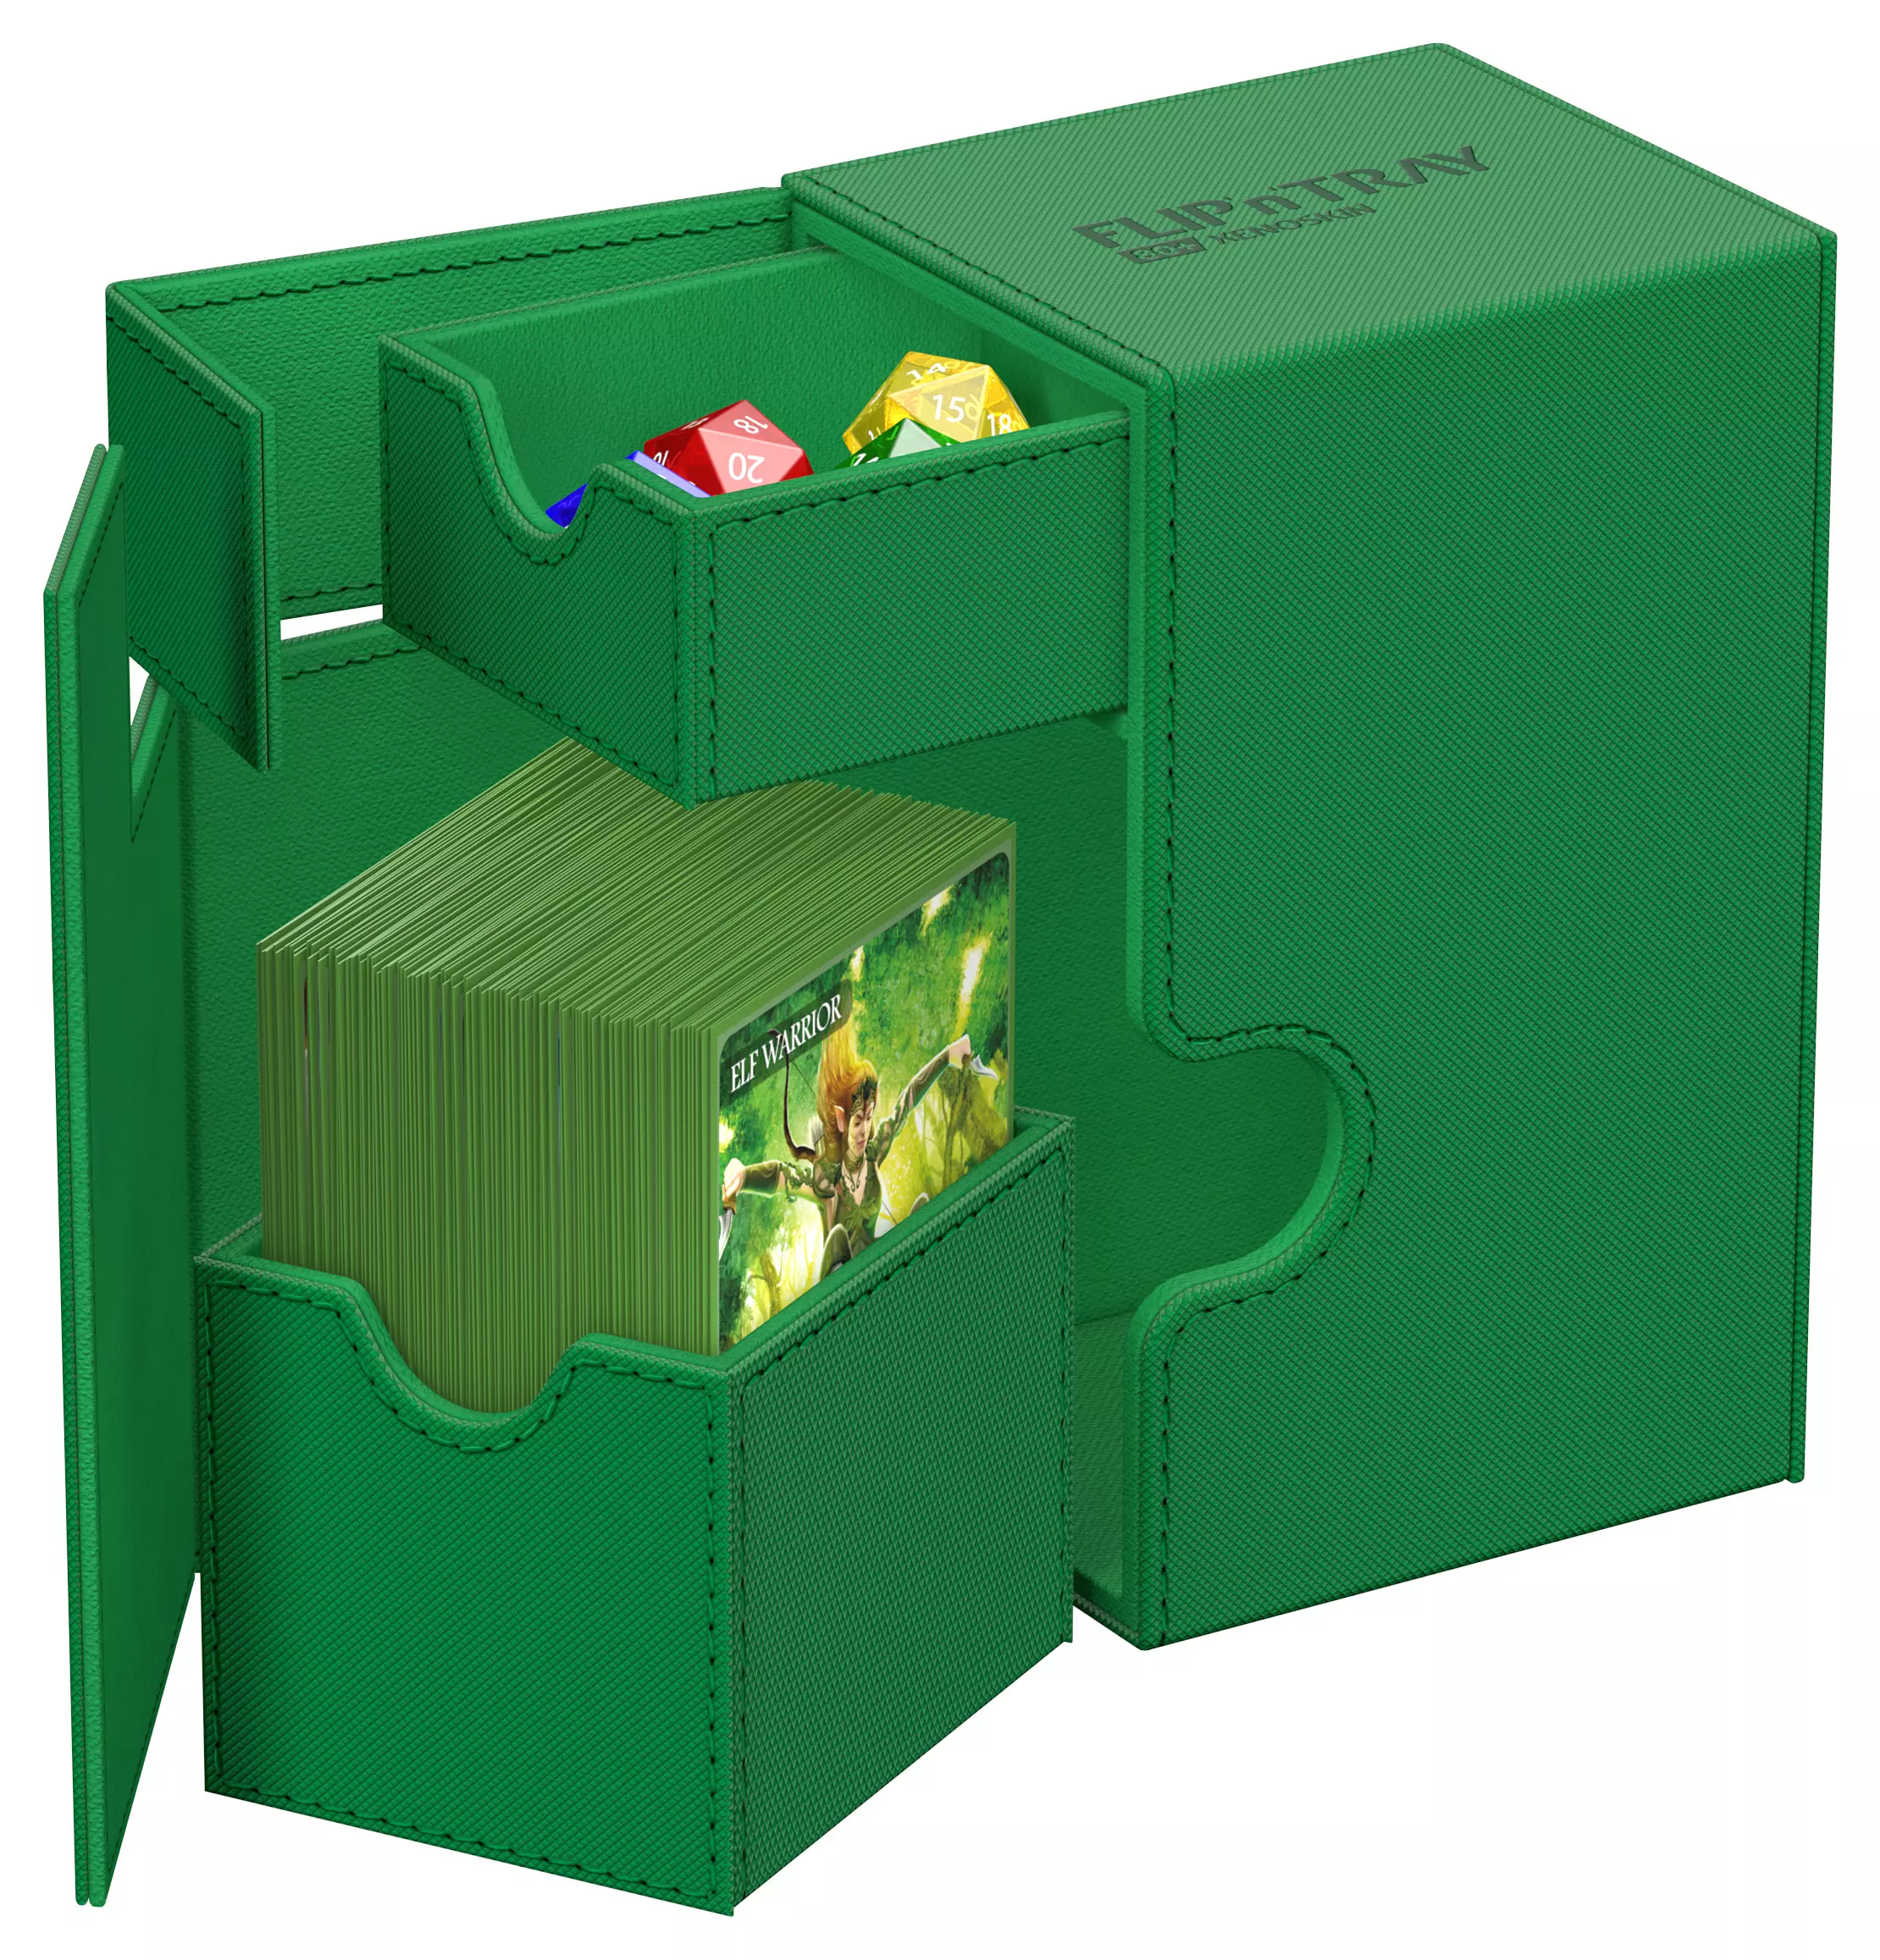 Ultimate Guard Card Deck Box Flip'n'Tray 80+ Green Grün